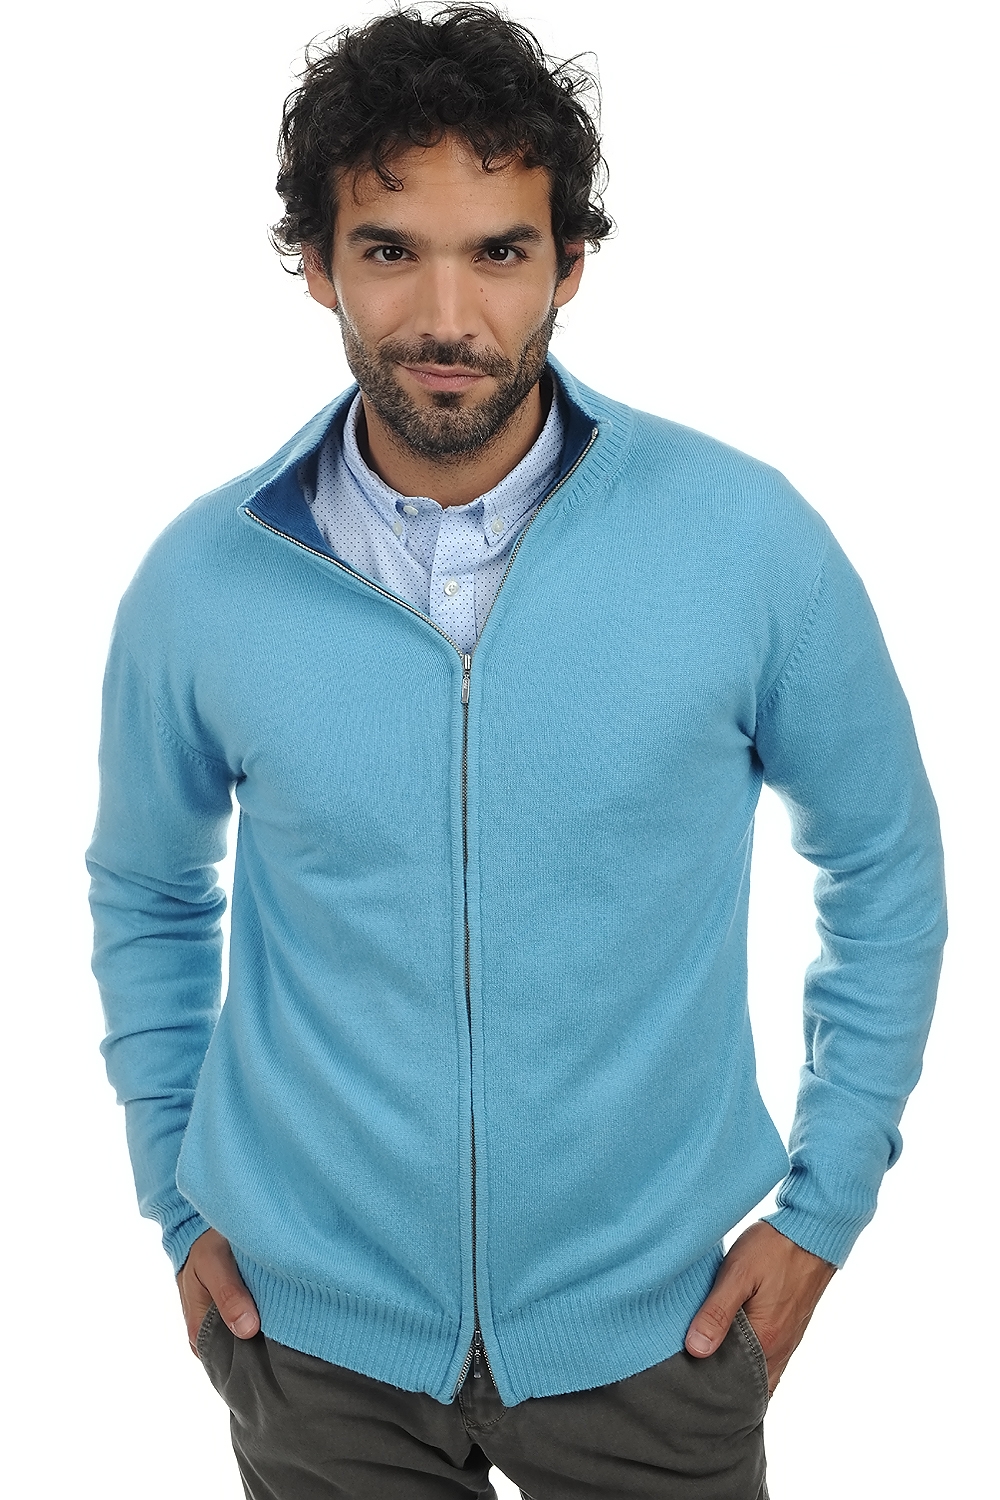 Cashmere men waistcoat sleeveless sweaters ronald teal blue canard blue xs